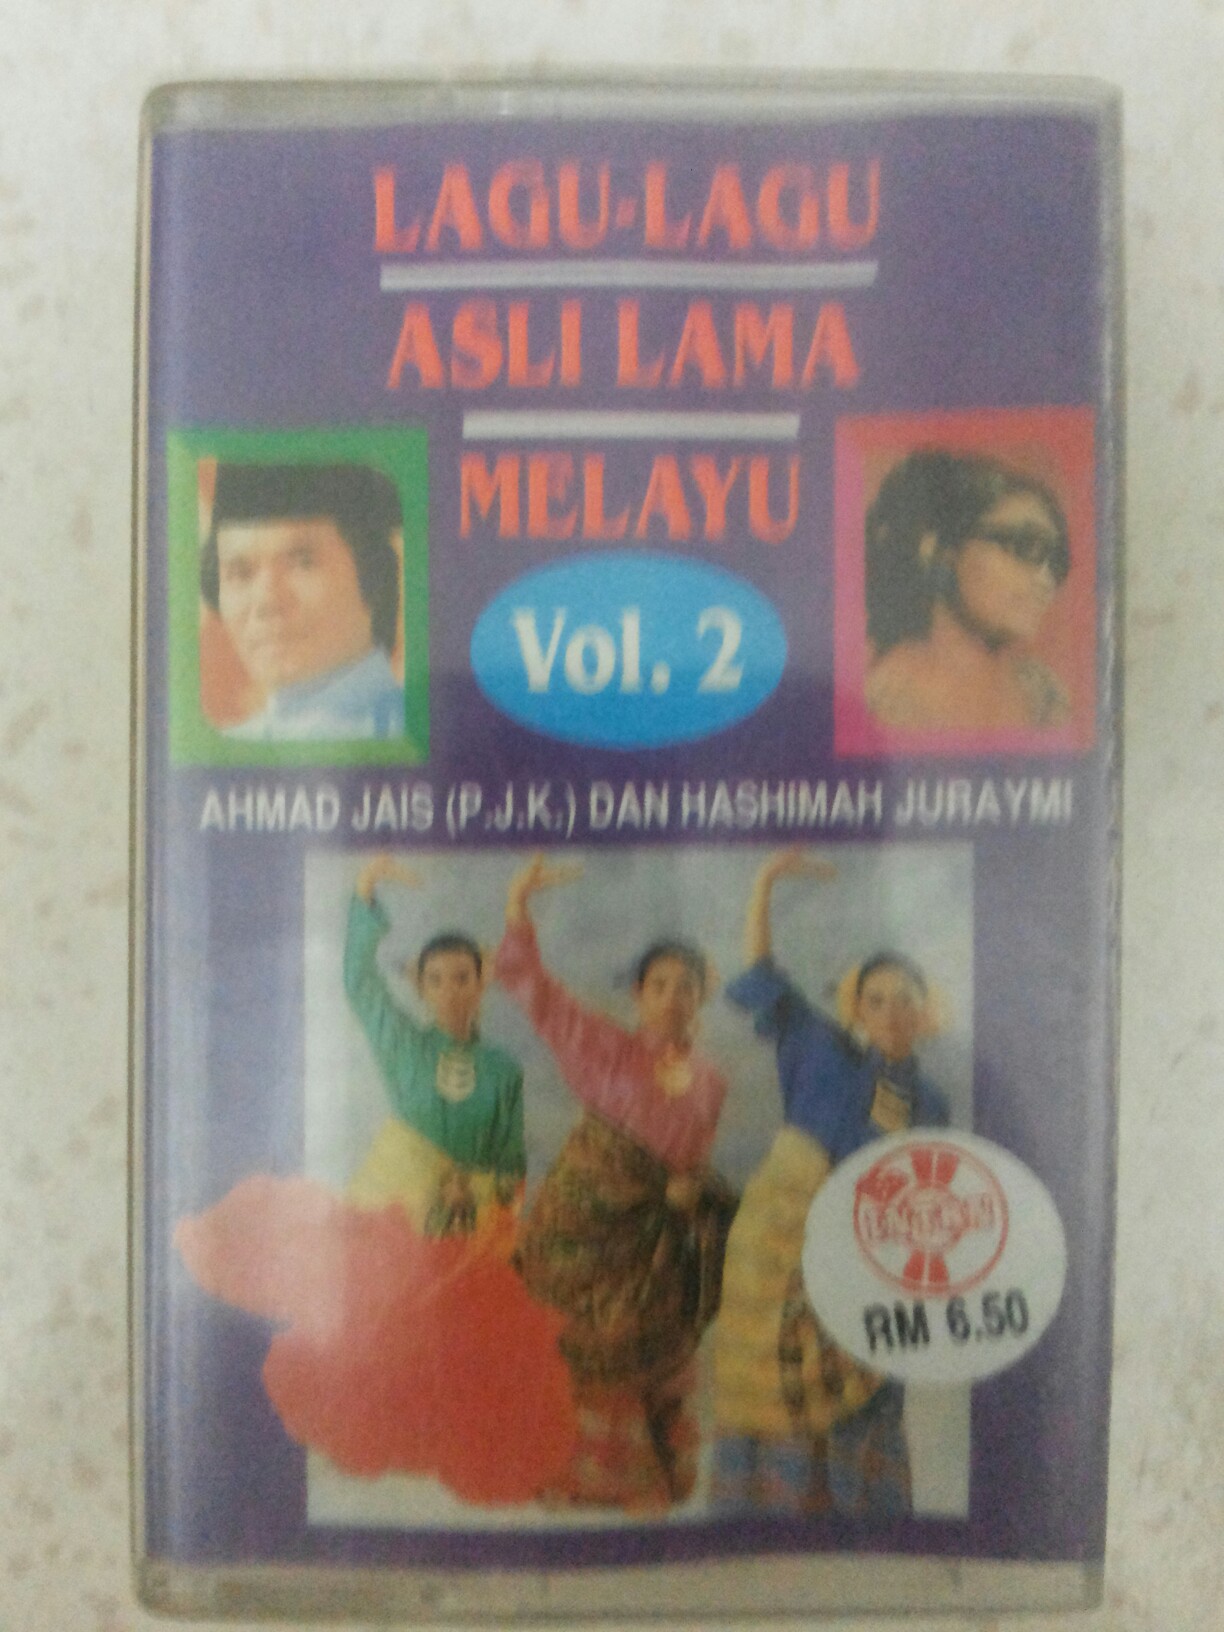 Kaset Lagu Melayu Asli Lama Music Media Cd S Dvd S Other Media On Carousell